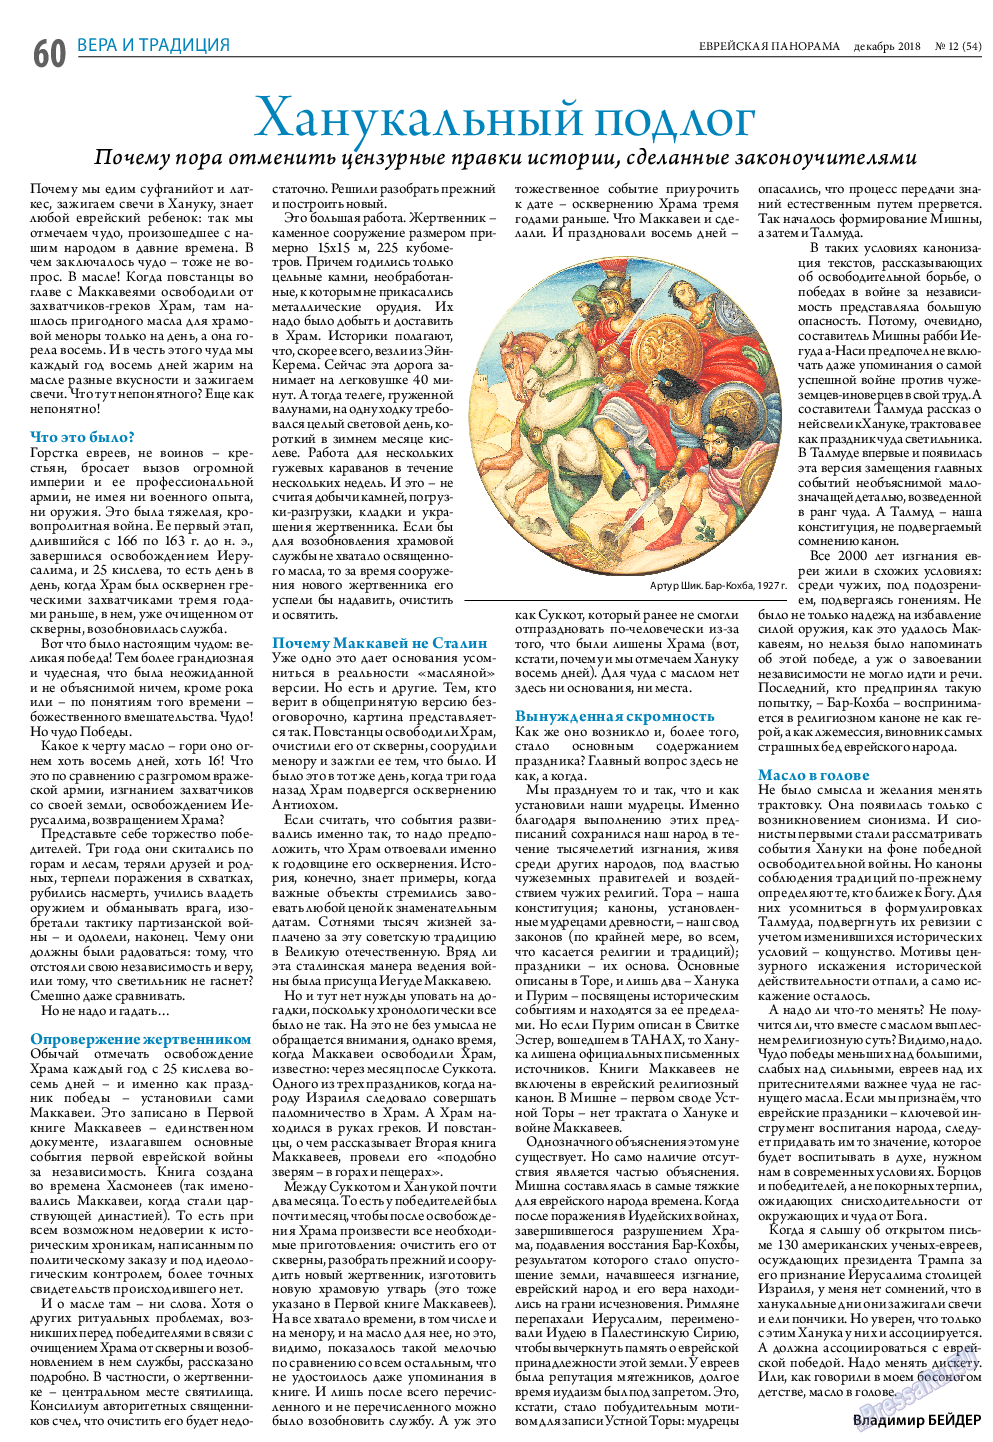 Еврейская панорама, газета. 2018 №12 стр.60